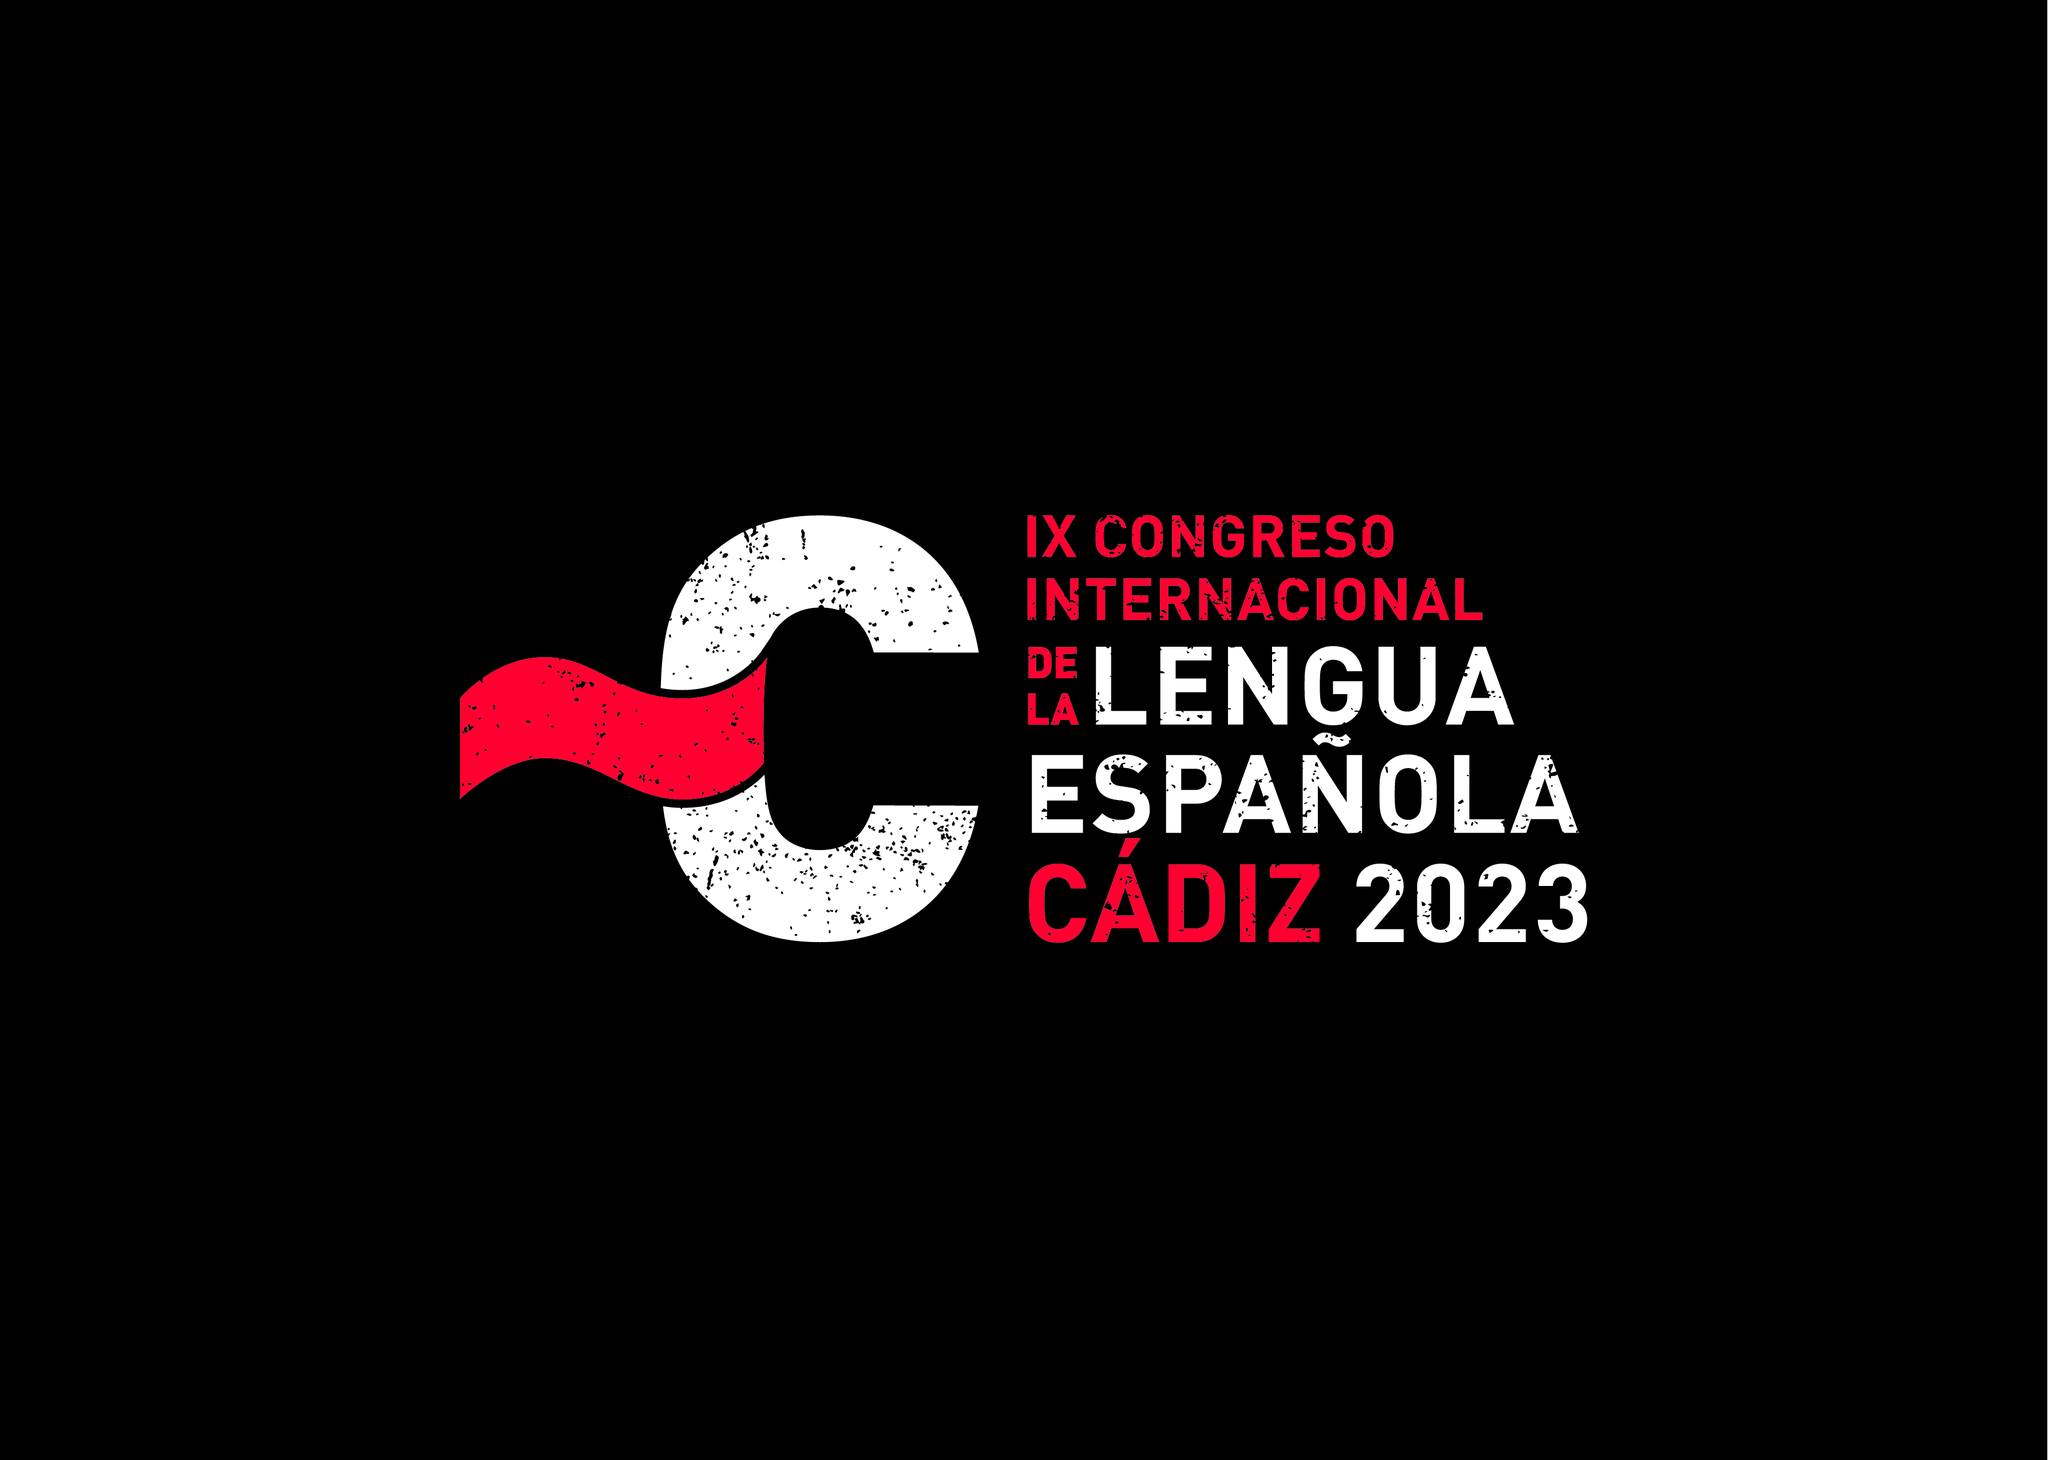 Ix congreso internacional de la lengua española